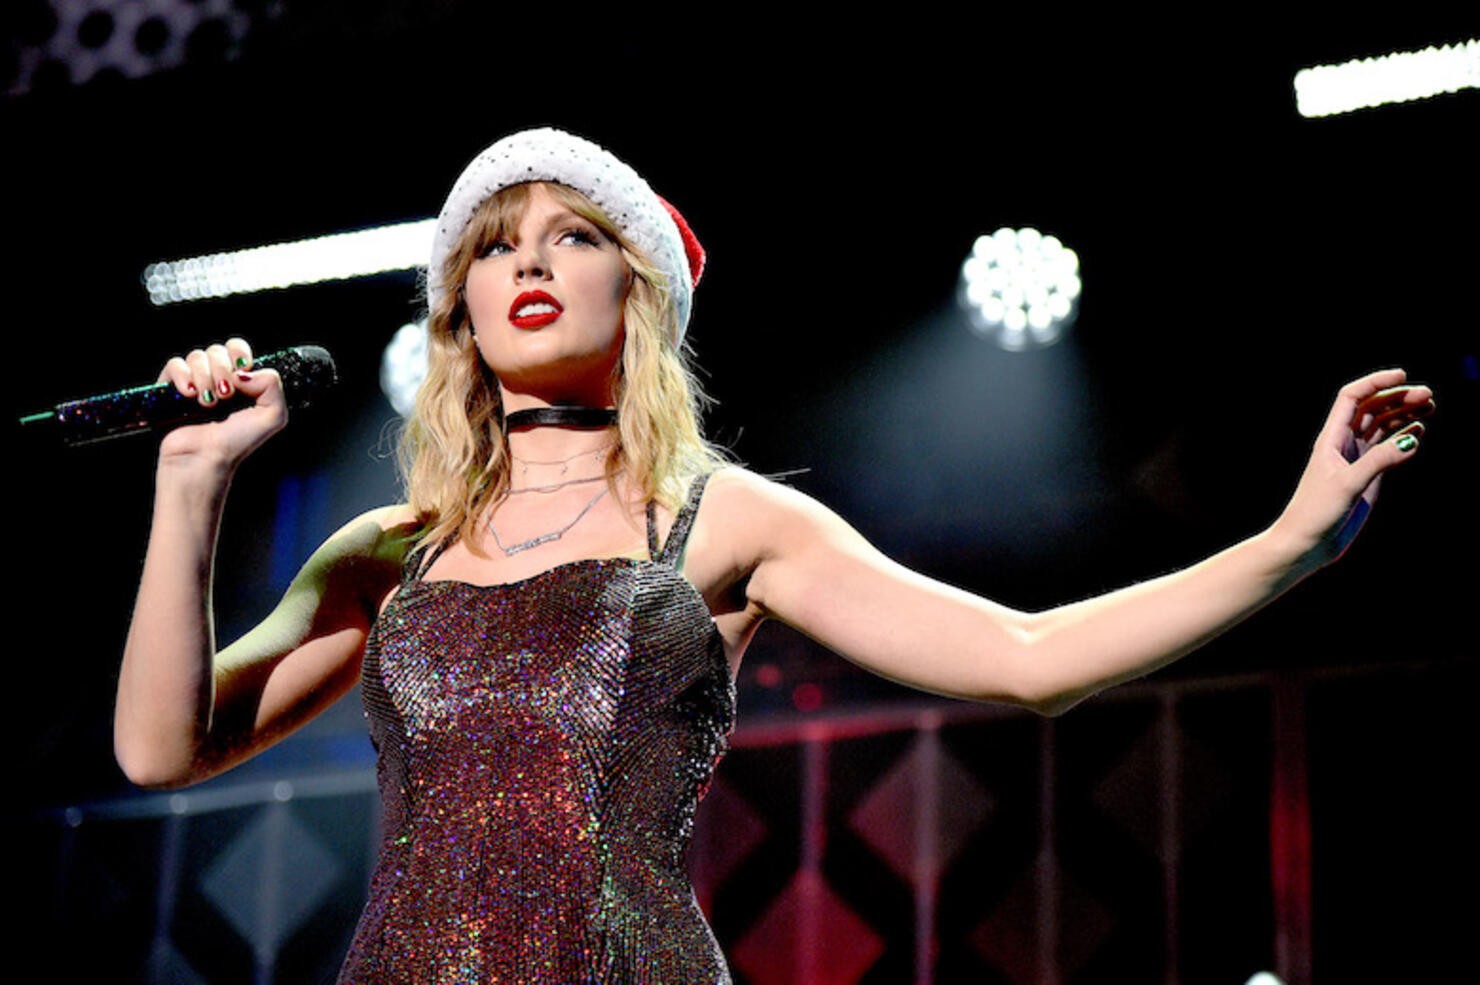 Taylor Swift Brings Holiday Cheer to Jingle Ball with "Christmas Tree